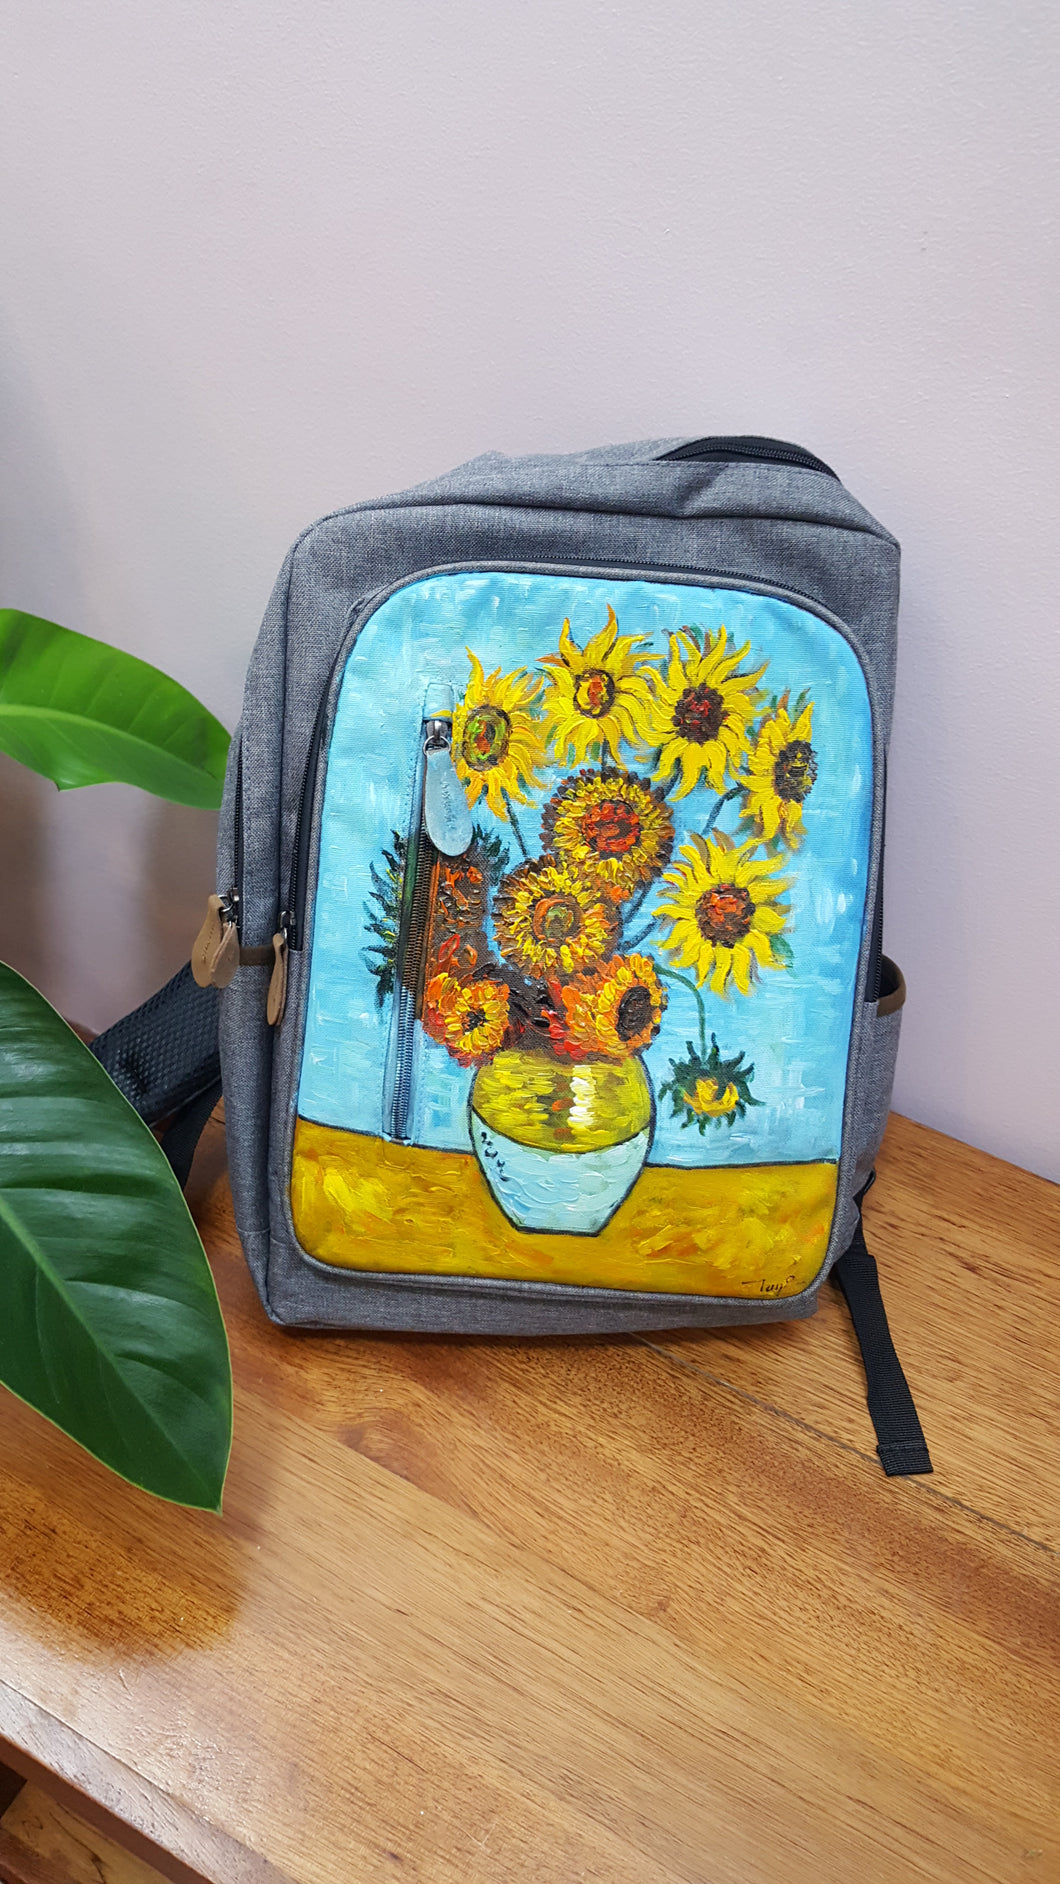 Van Gogh Sunflowers - Painting on Hershel-like backpack